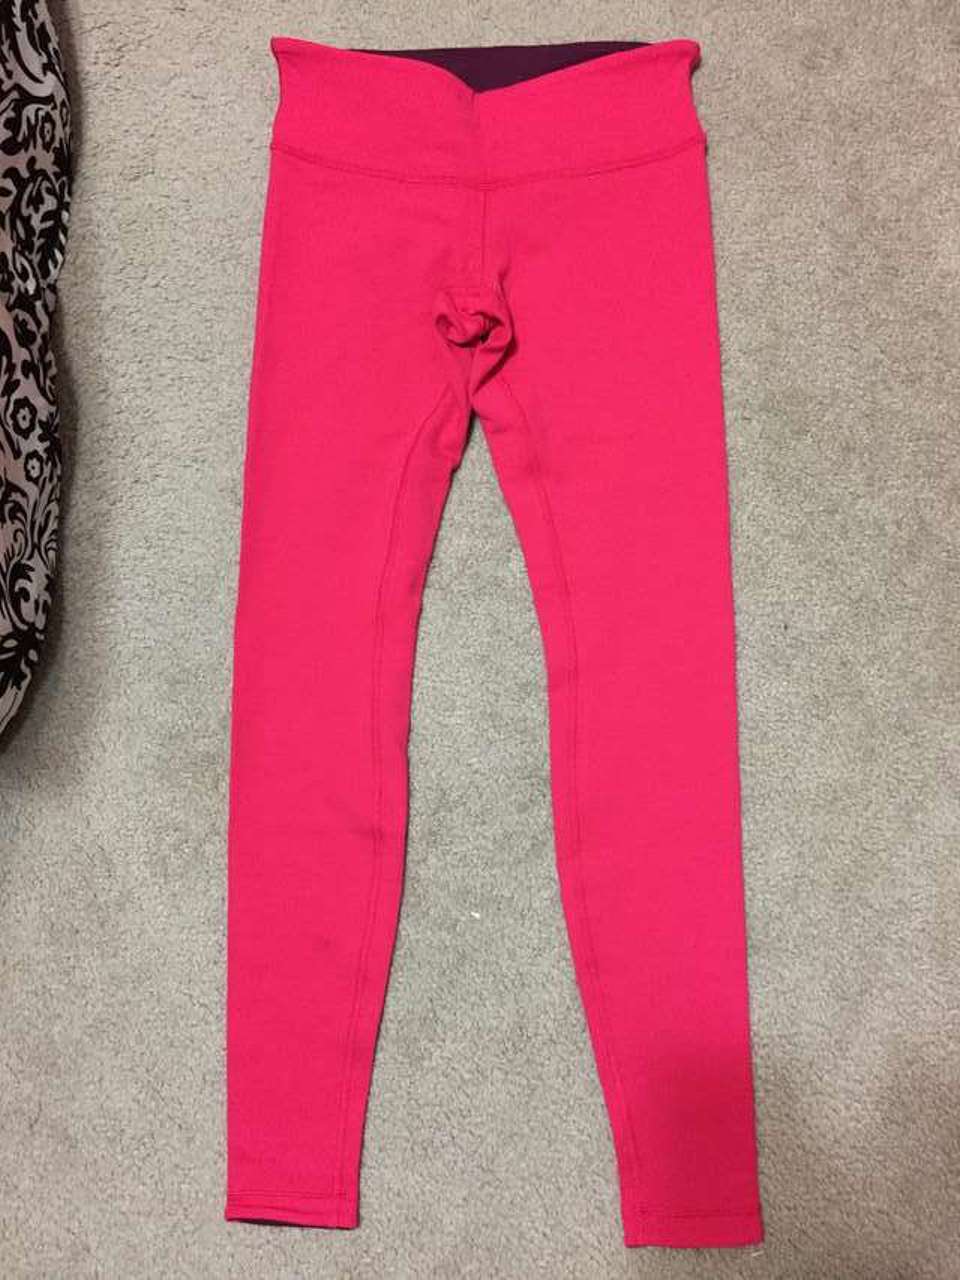 Lululemon Wunder Under 7/8 Tight size 12 So Merlot NWT Red Pink Luon Yoga  Pant